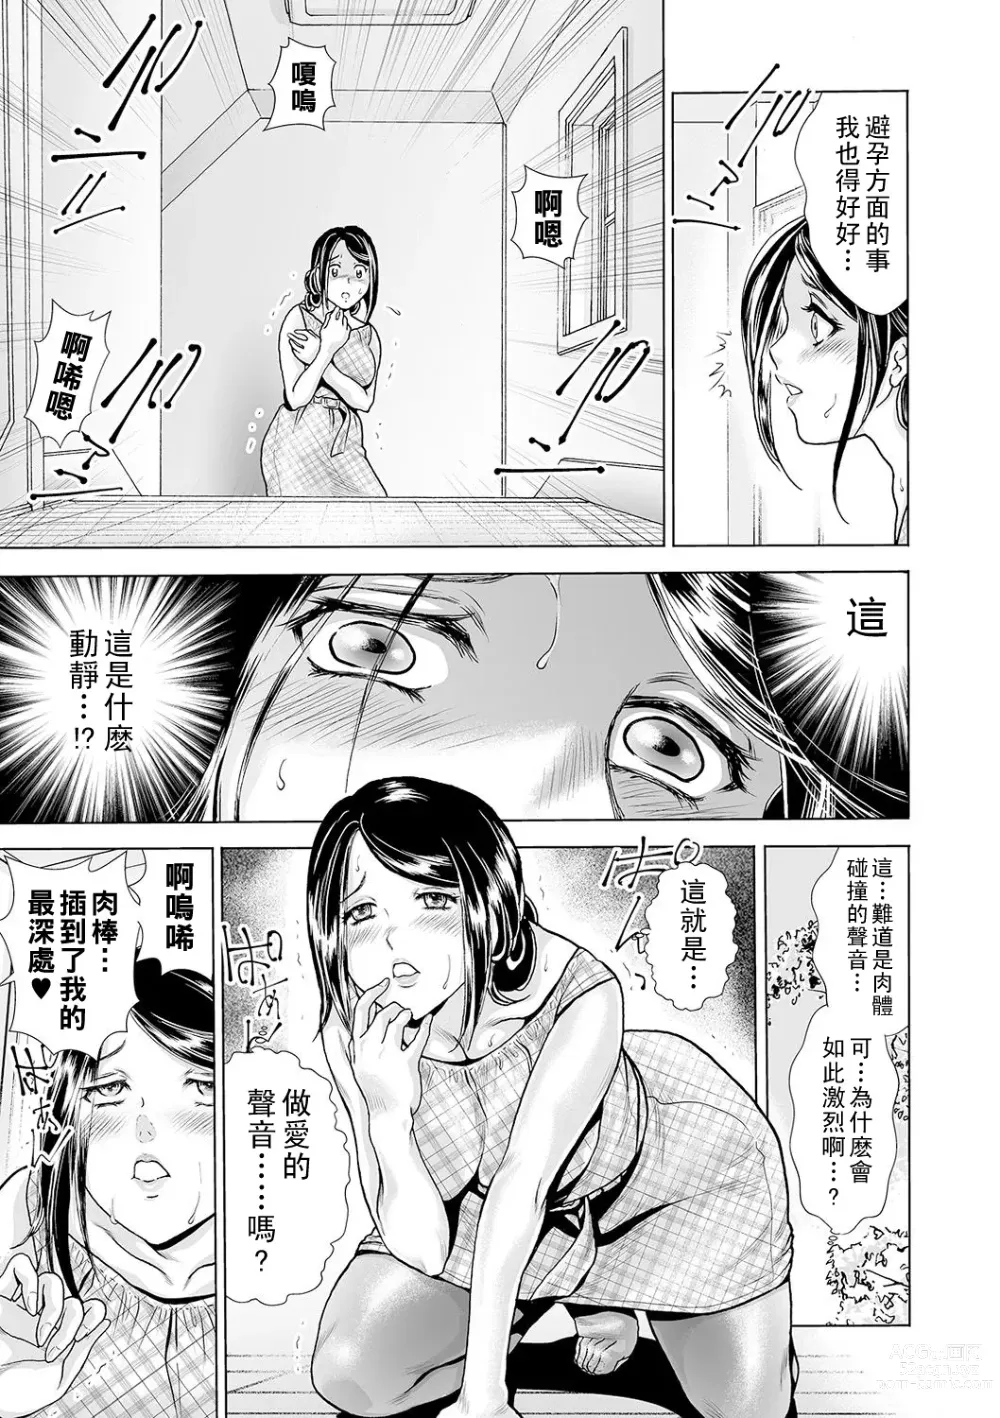 Page 15 of manga Hahaoya no Kamen ~Musume Kareshi o NTR~ Scene. 1